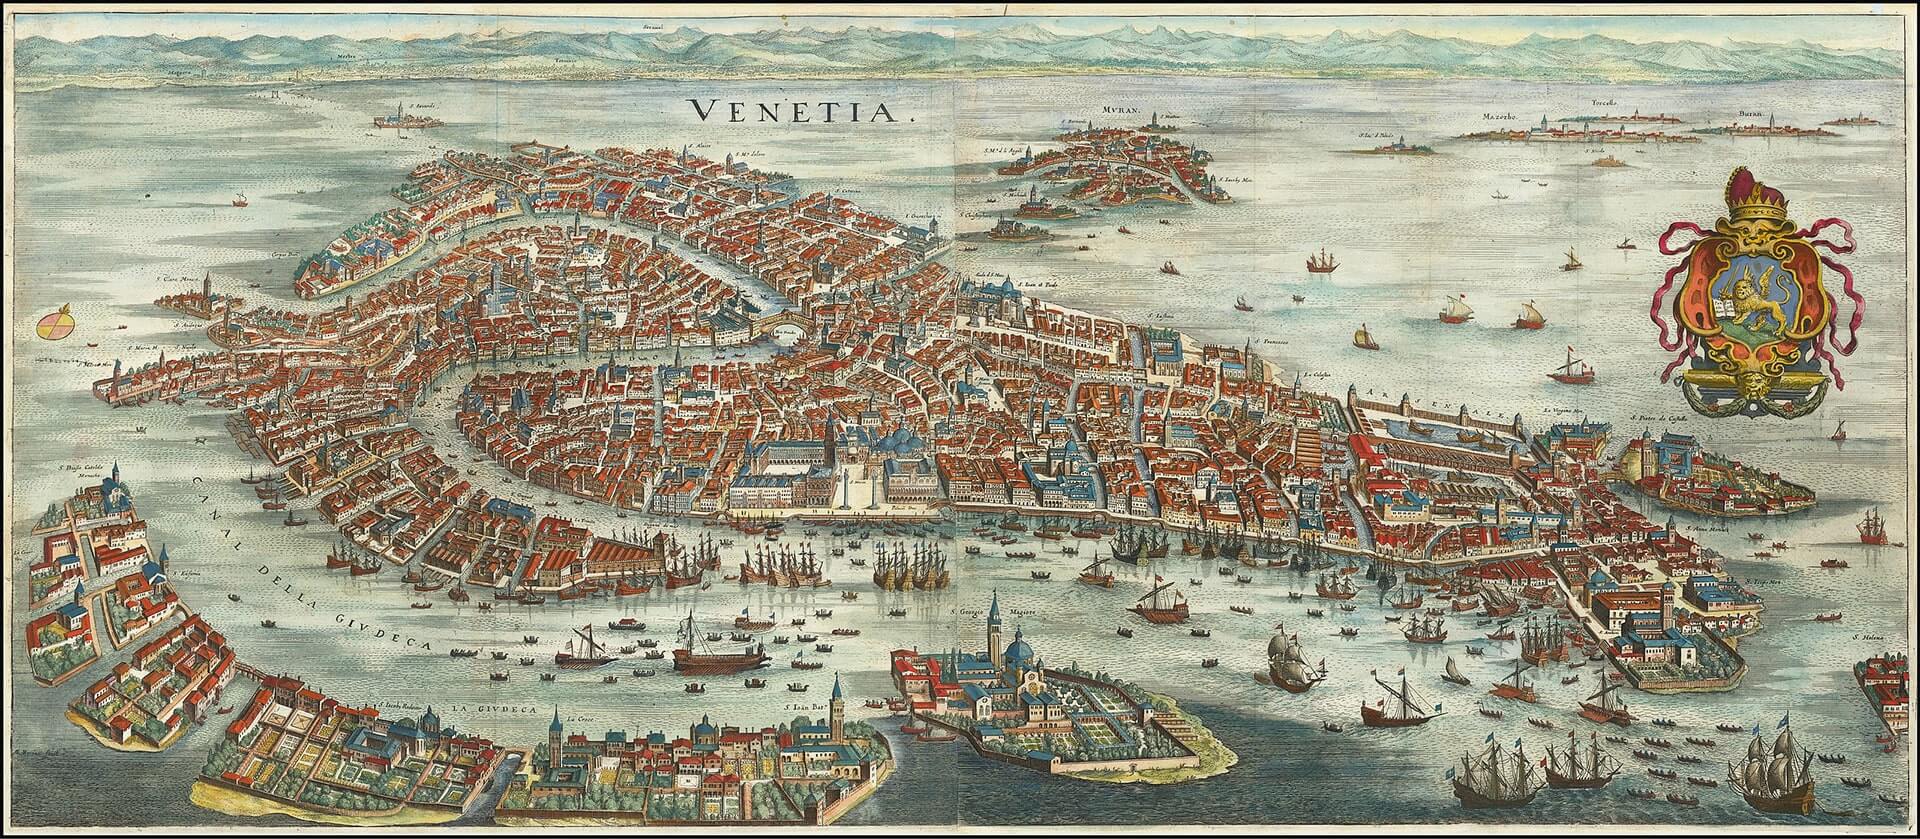 Venice in 1636 as rendered by Matthäus Merian